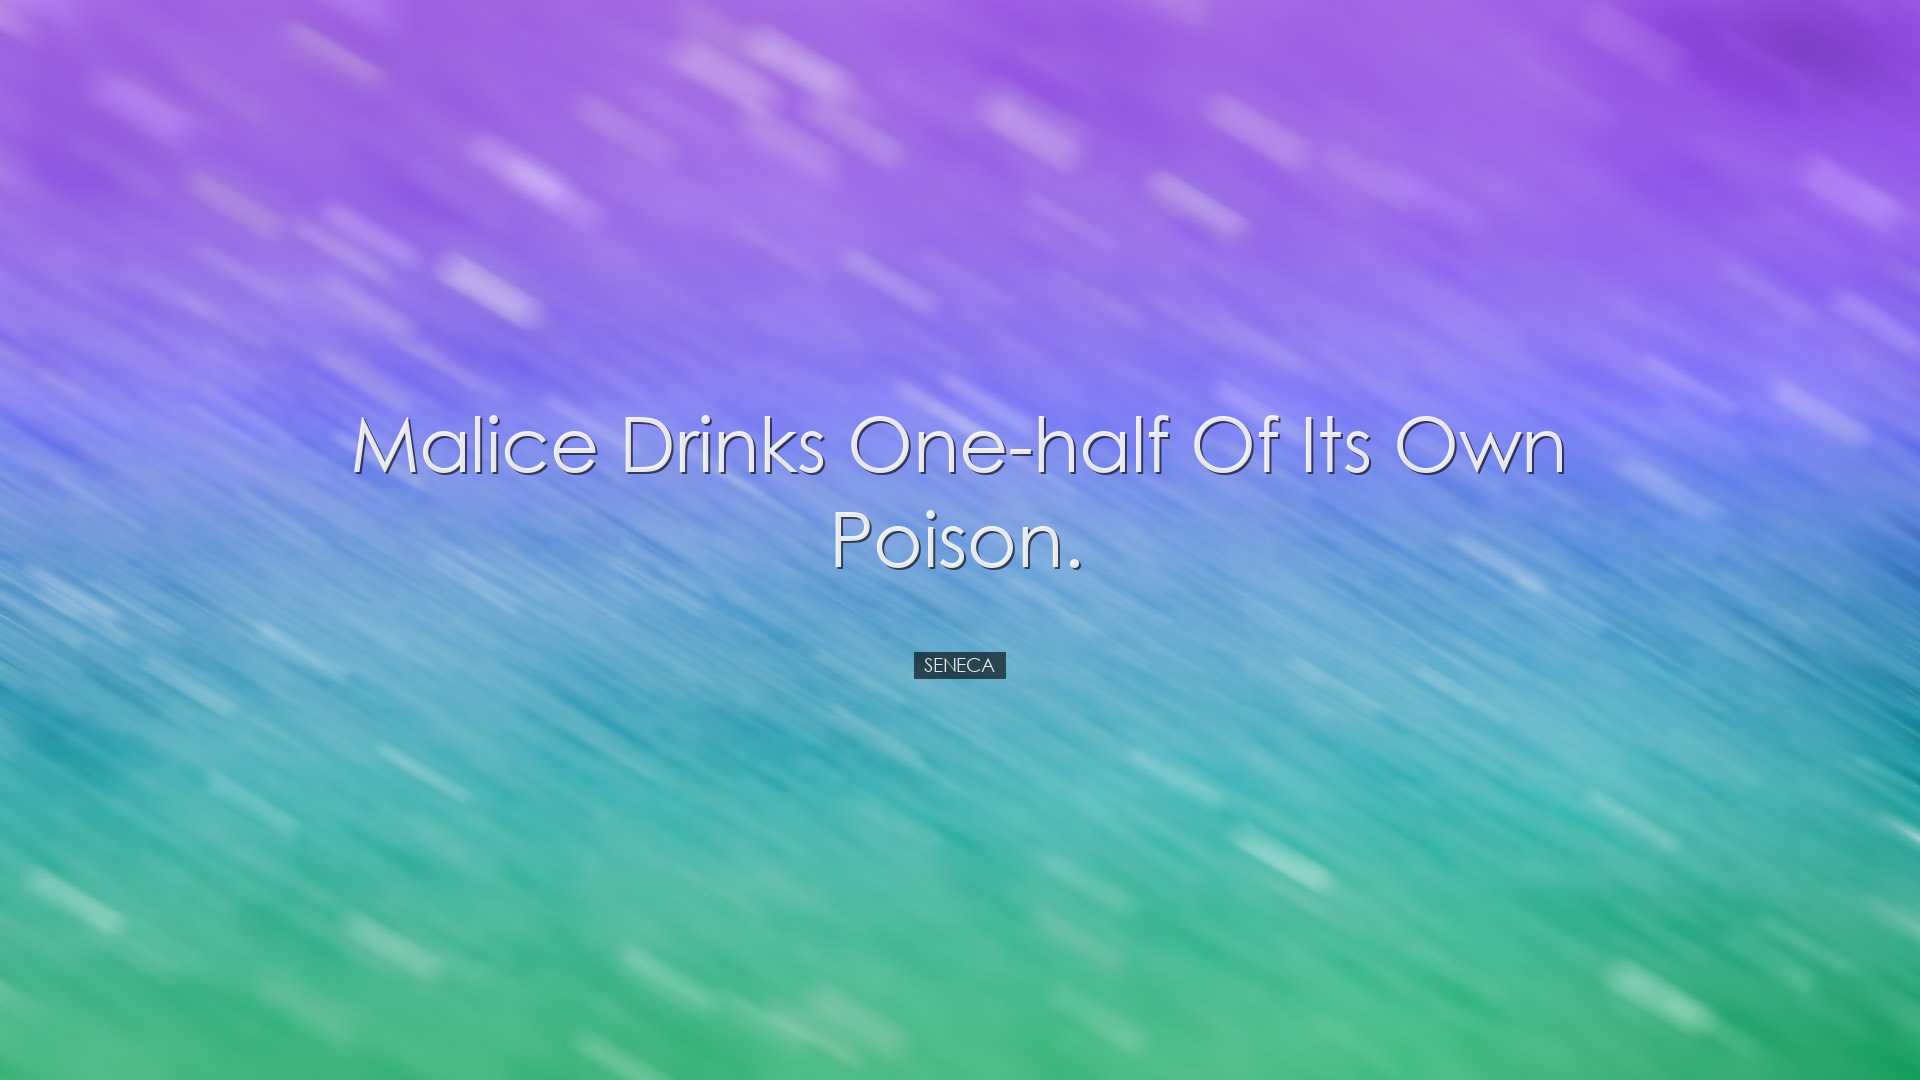 Malice drinks one-half of its own poison. - Seneca